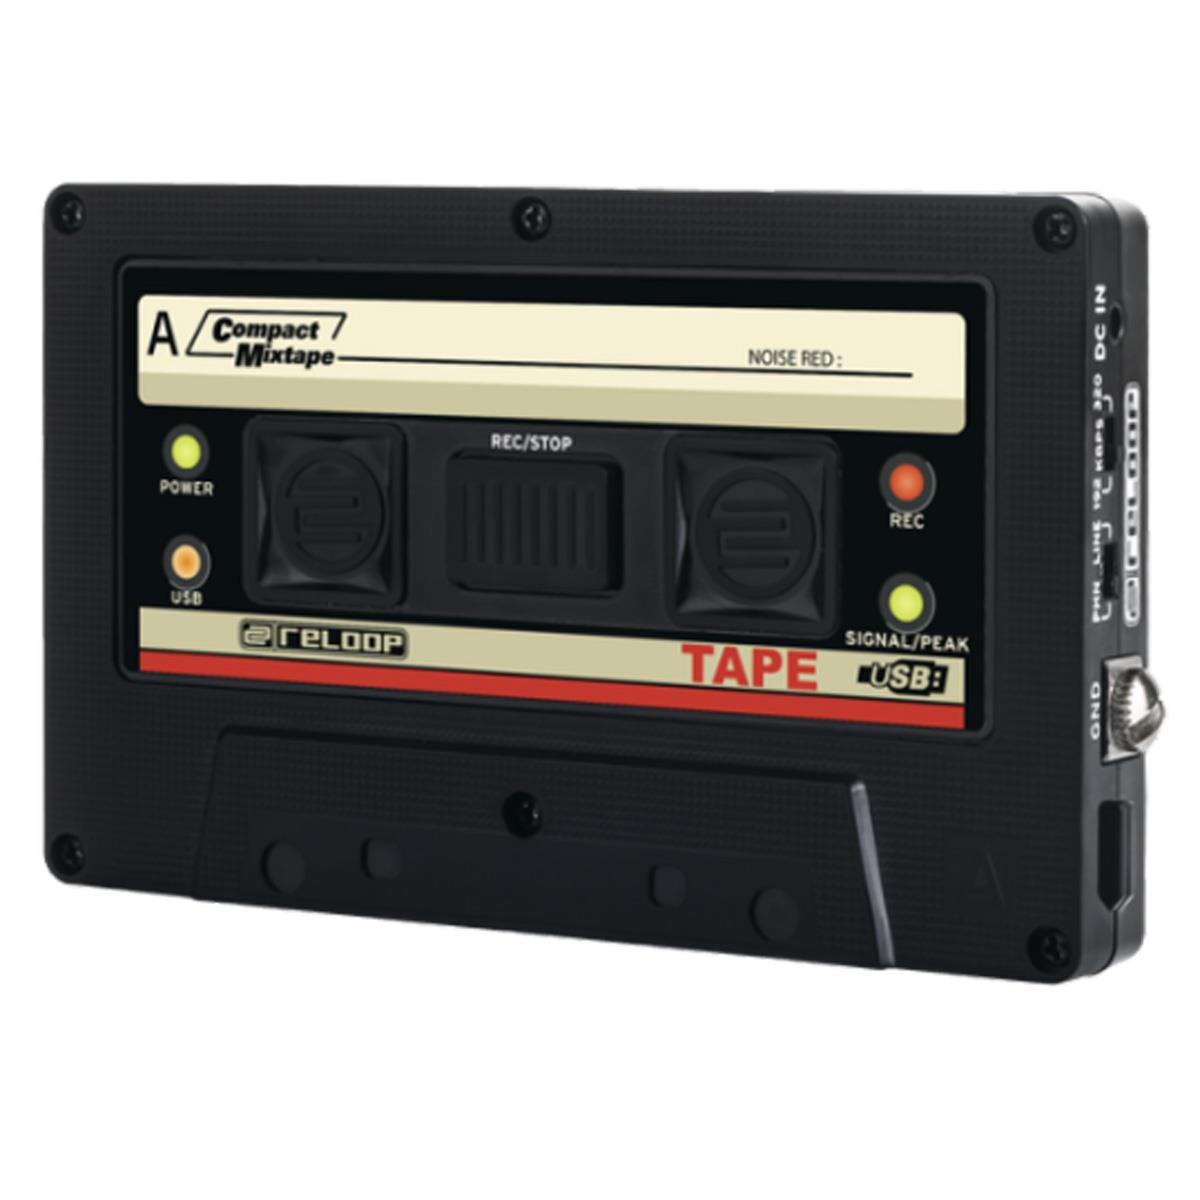 Image of Reloop USB Mixtape Recorder with Retro Cassette Look